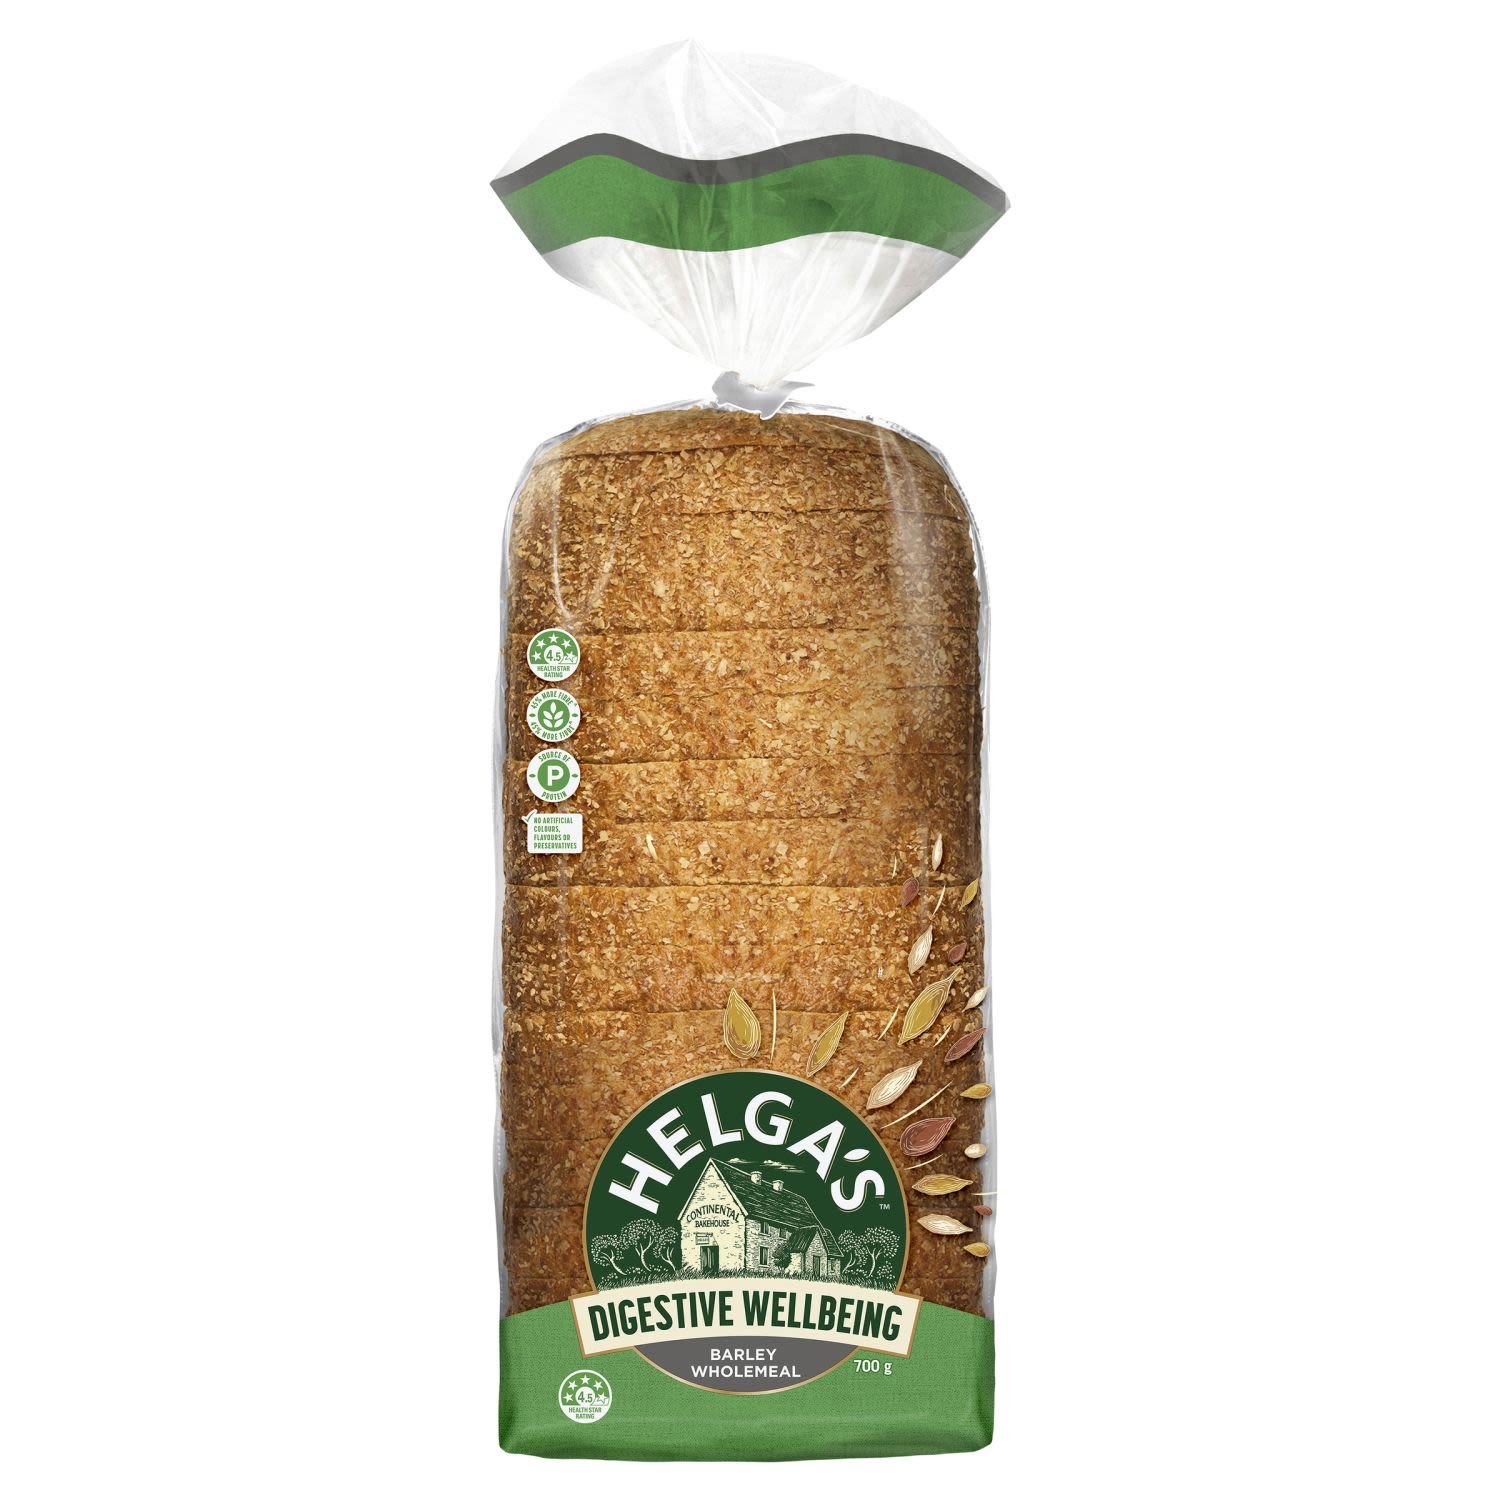 Helga's Digestive Wellbeing Barley Wholemeal Loaf, 700 Gram